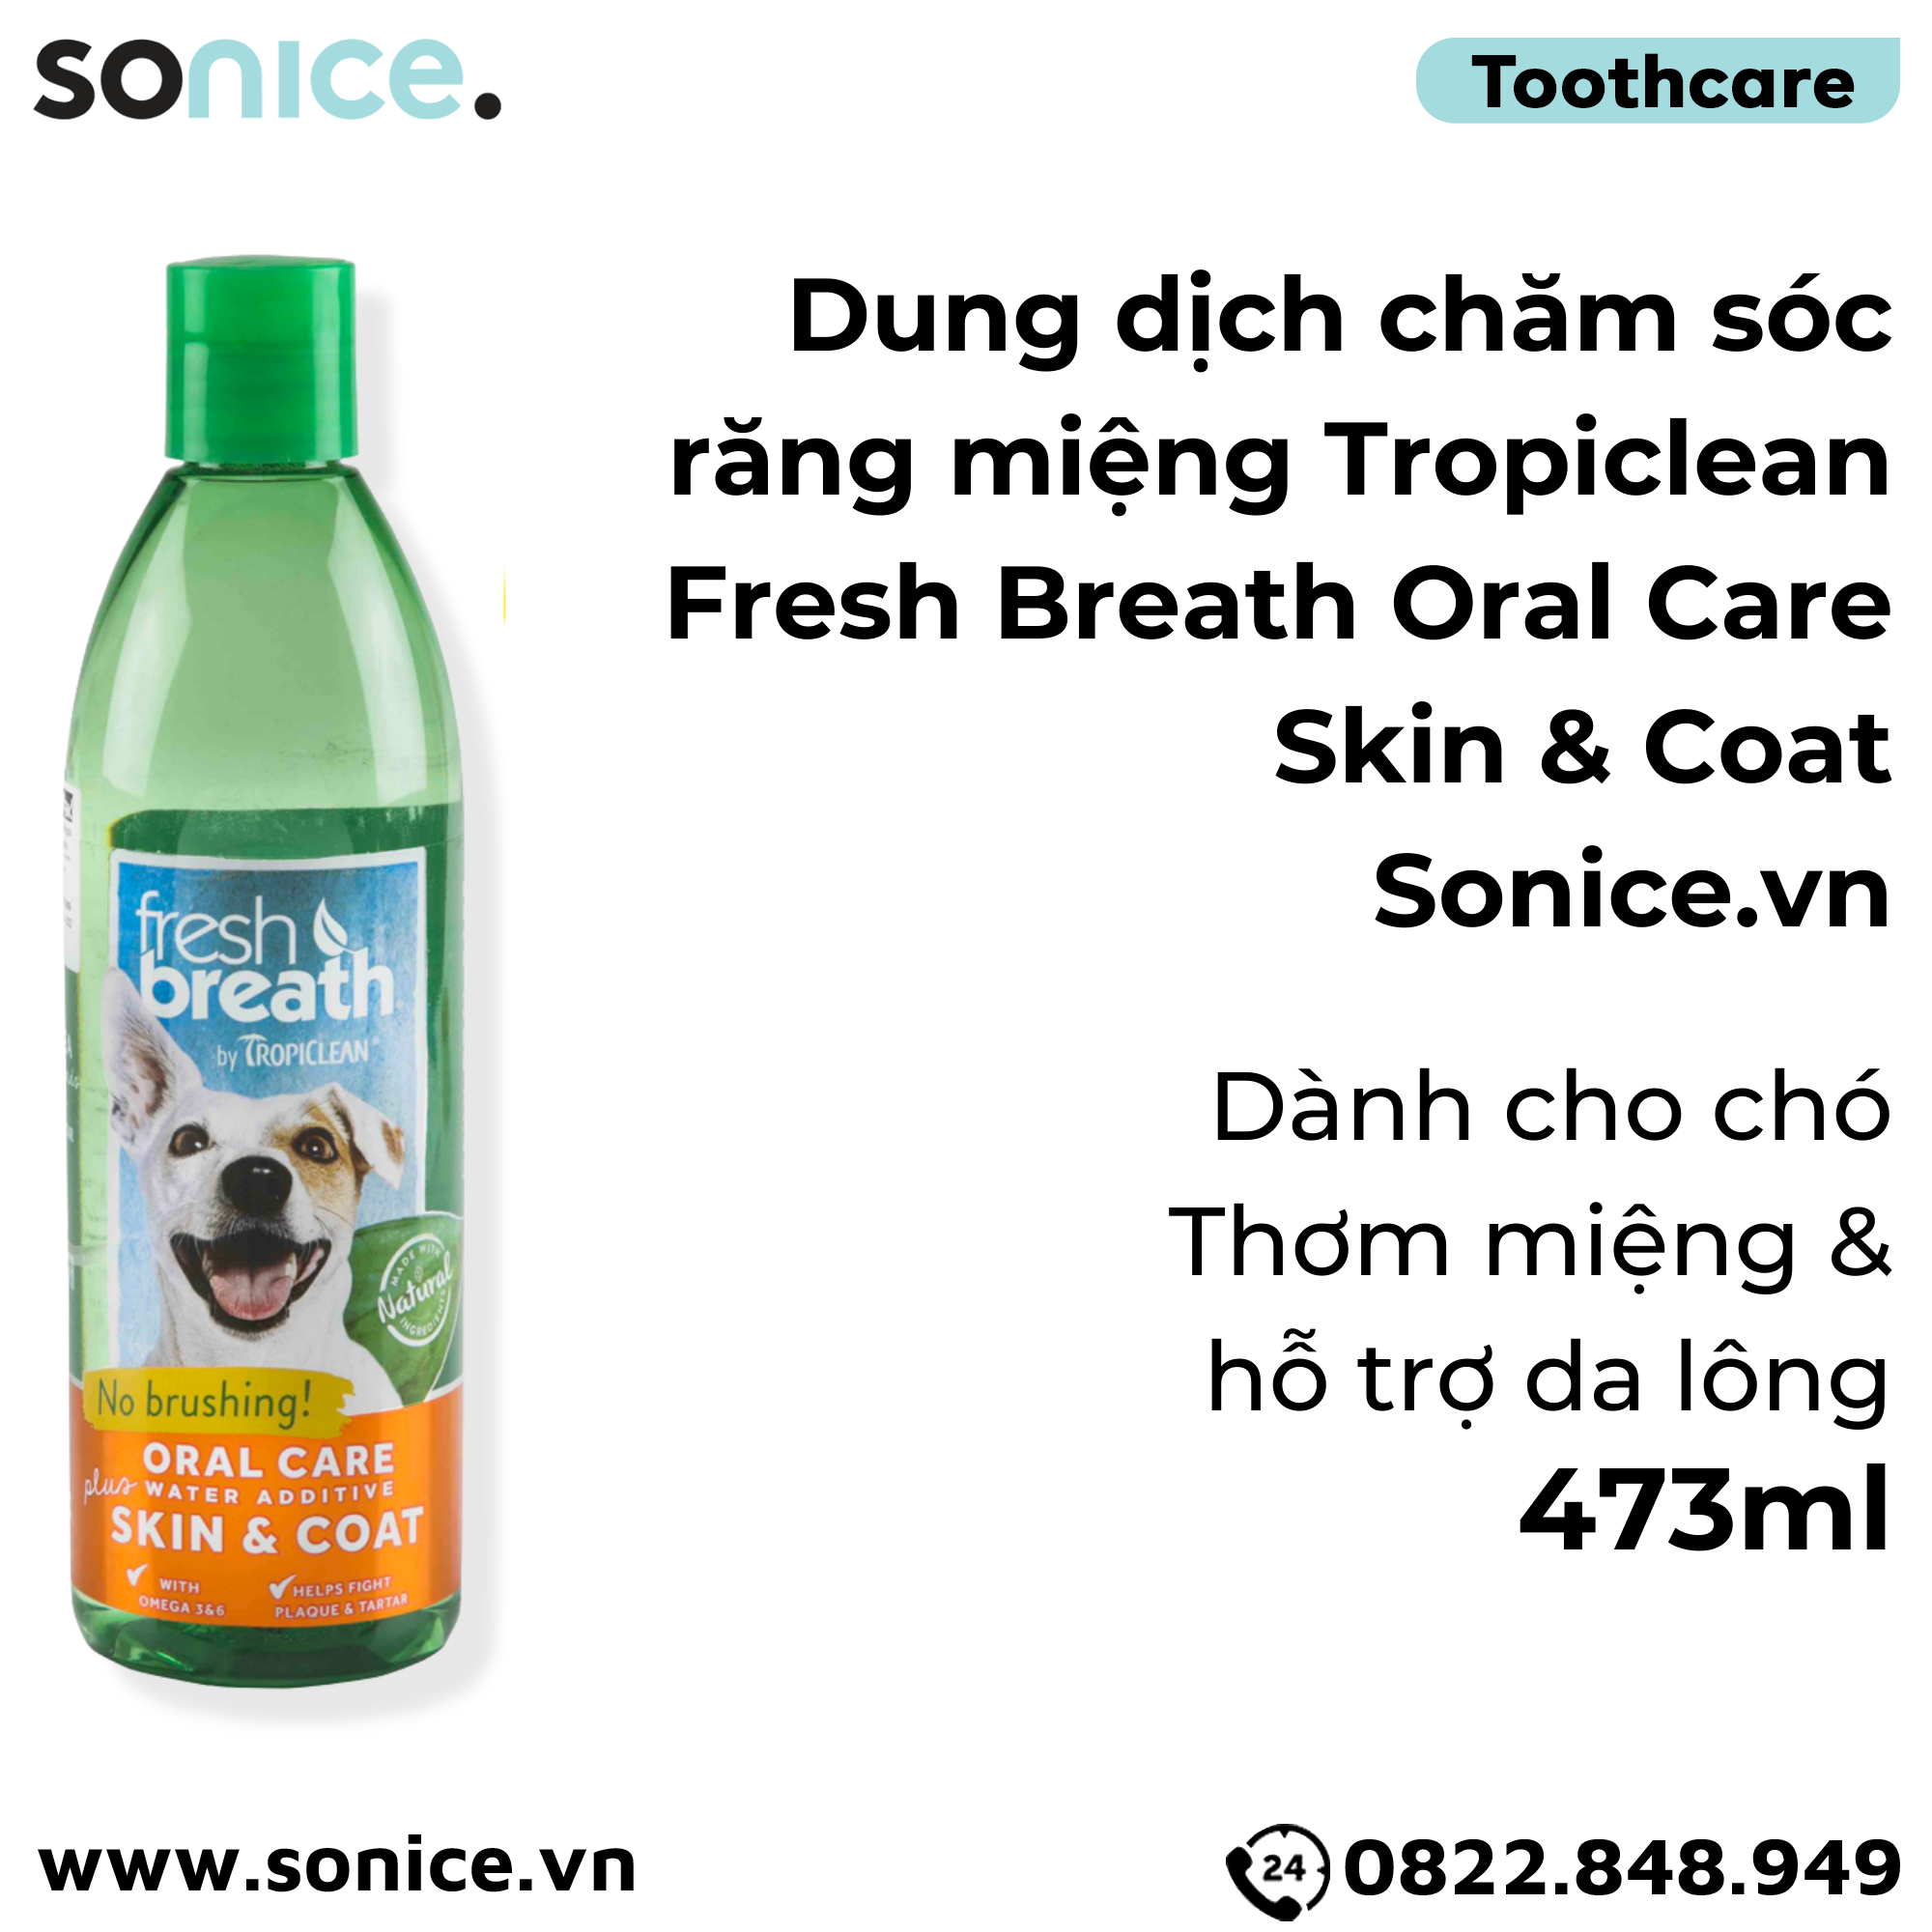  Dung dịch chăm sóc răng miệng TropiClean Fresh Breath Oral Care & Skin Coat 473ml - Thơm miệng Hỗ trợ da lông SONICE. 